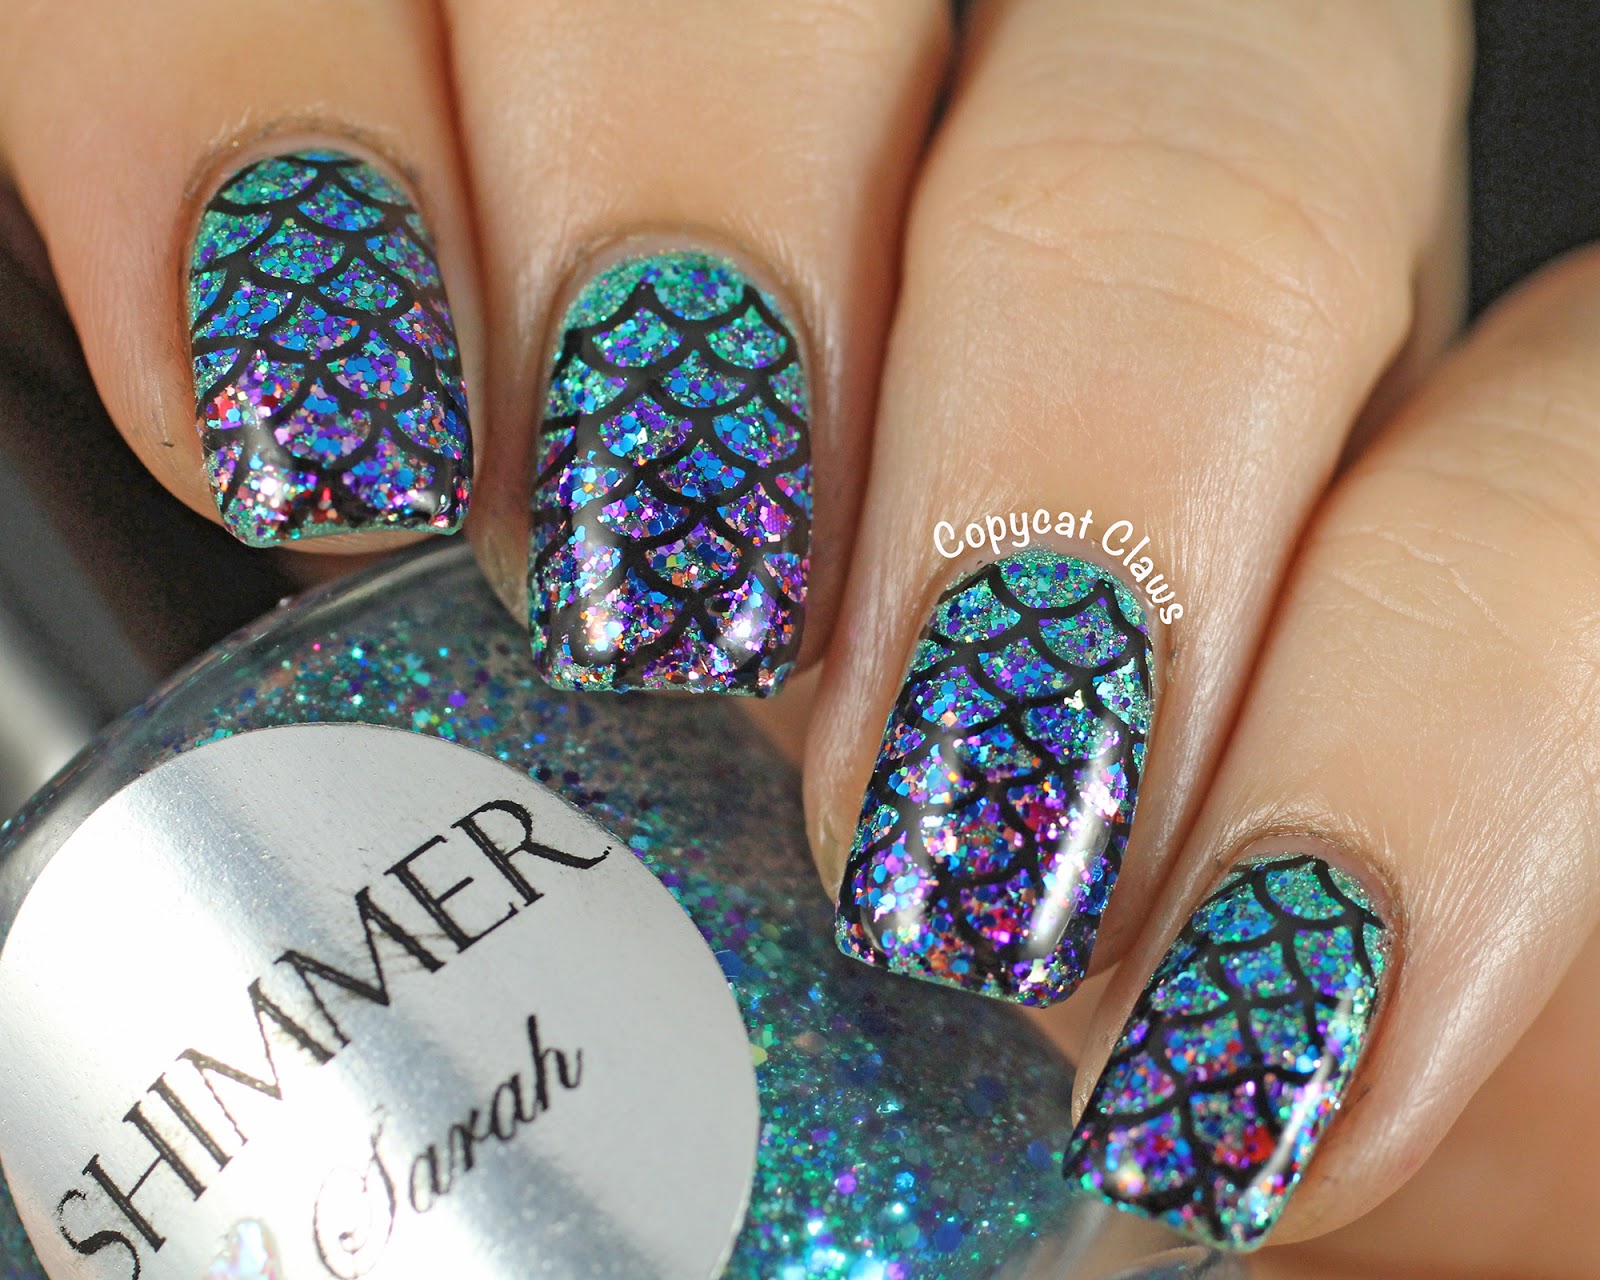 4. "Mermaid Vibes" nail polish combination - wide 3